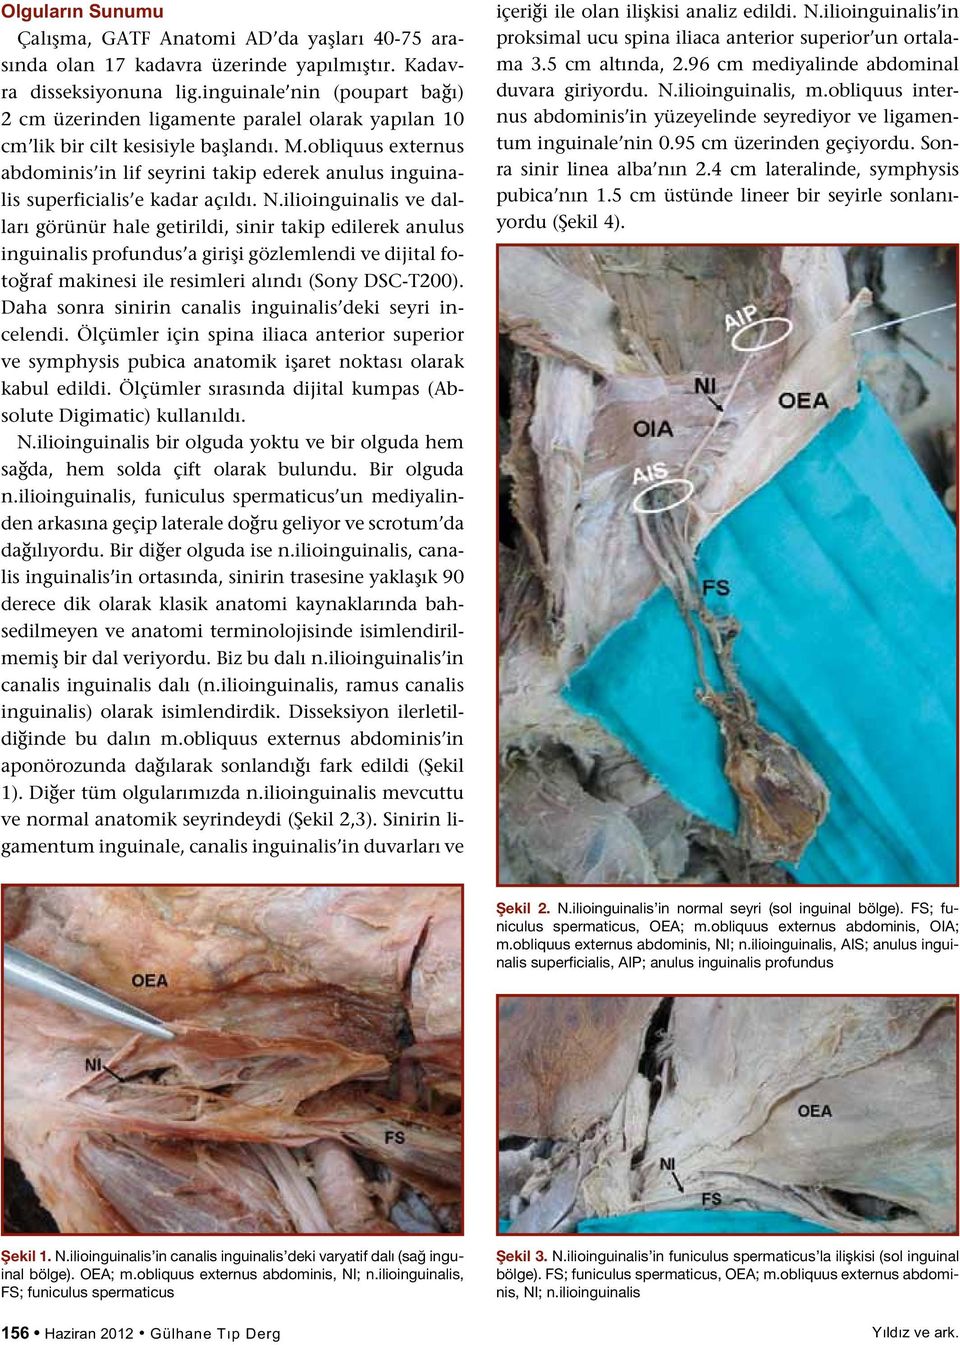 obliquus externus abdominis in lif seyrini takip ederek anulus inguinalis superficialis e kadar açıldı. N.